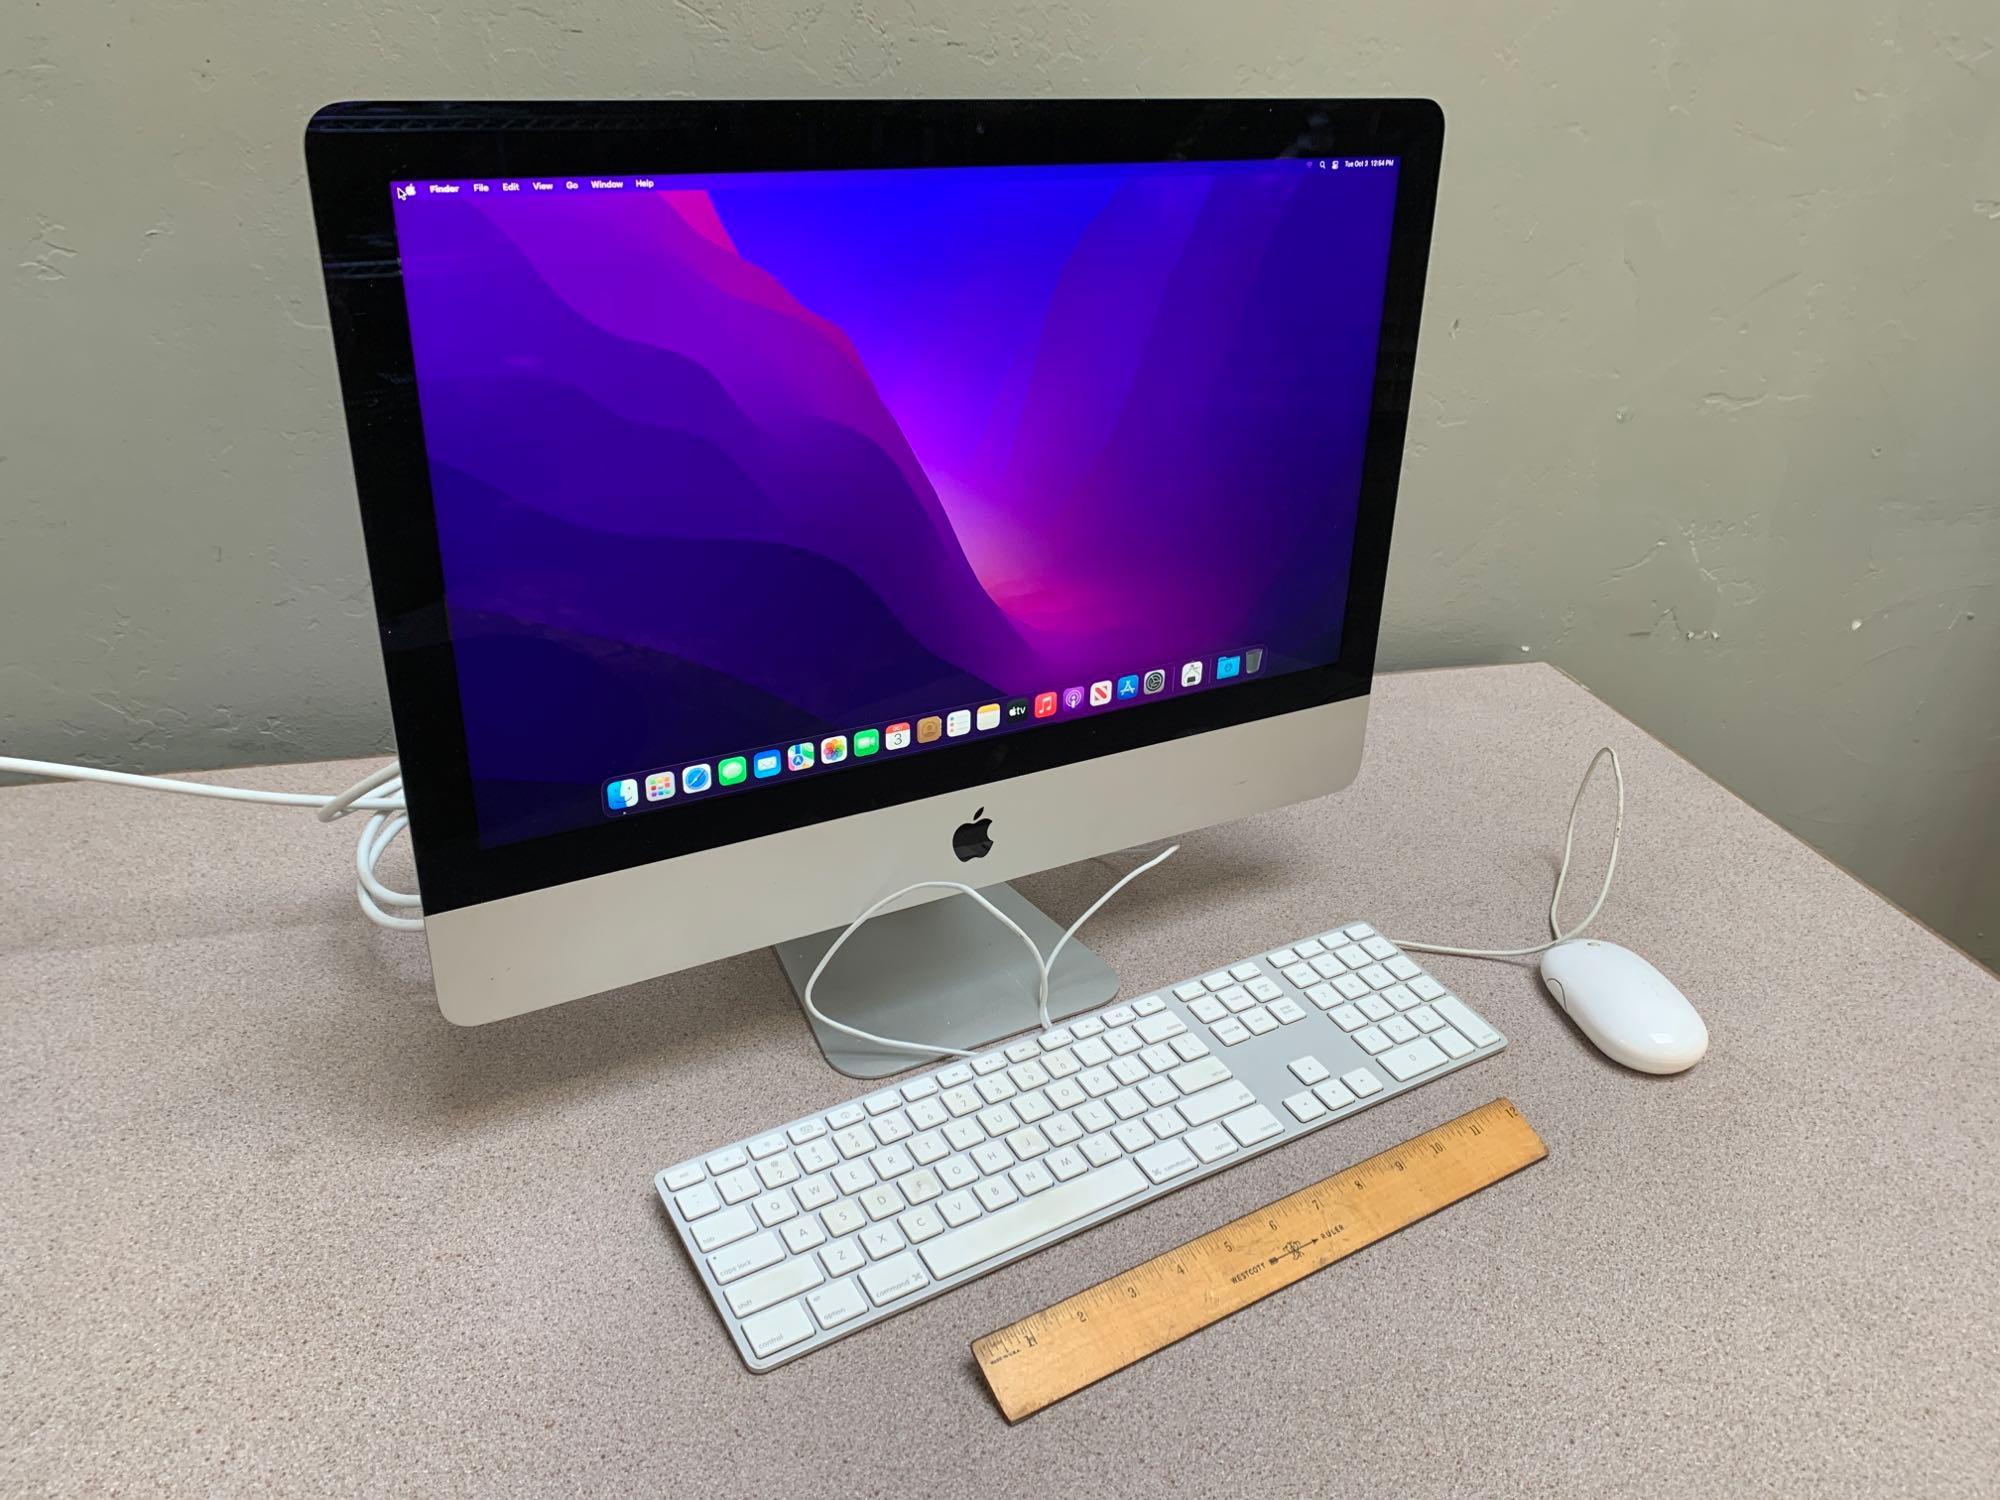 Apple iMac16,1 21.5" LCD AIO Computer Intel i5 | Proxibid